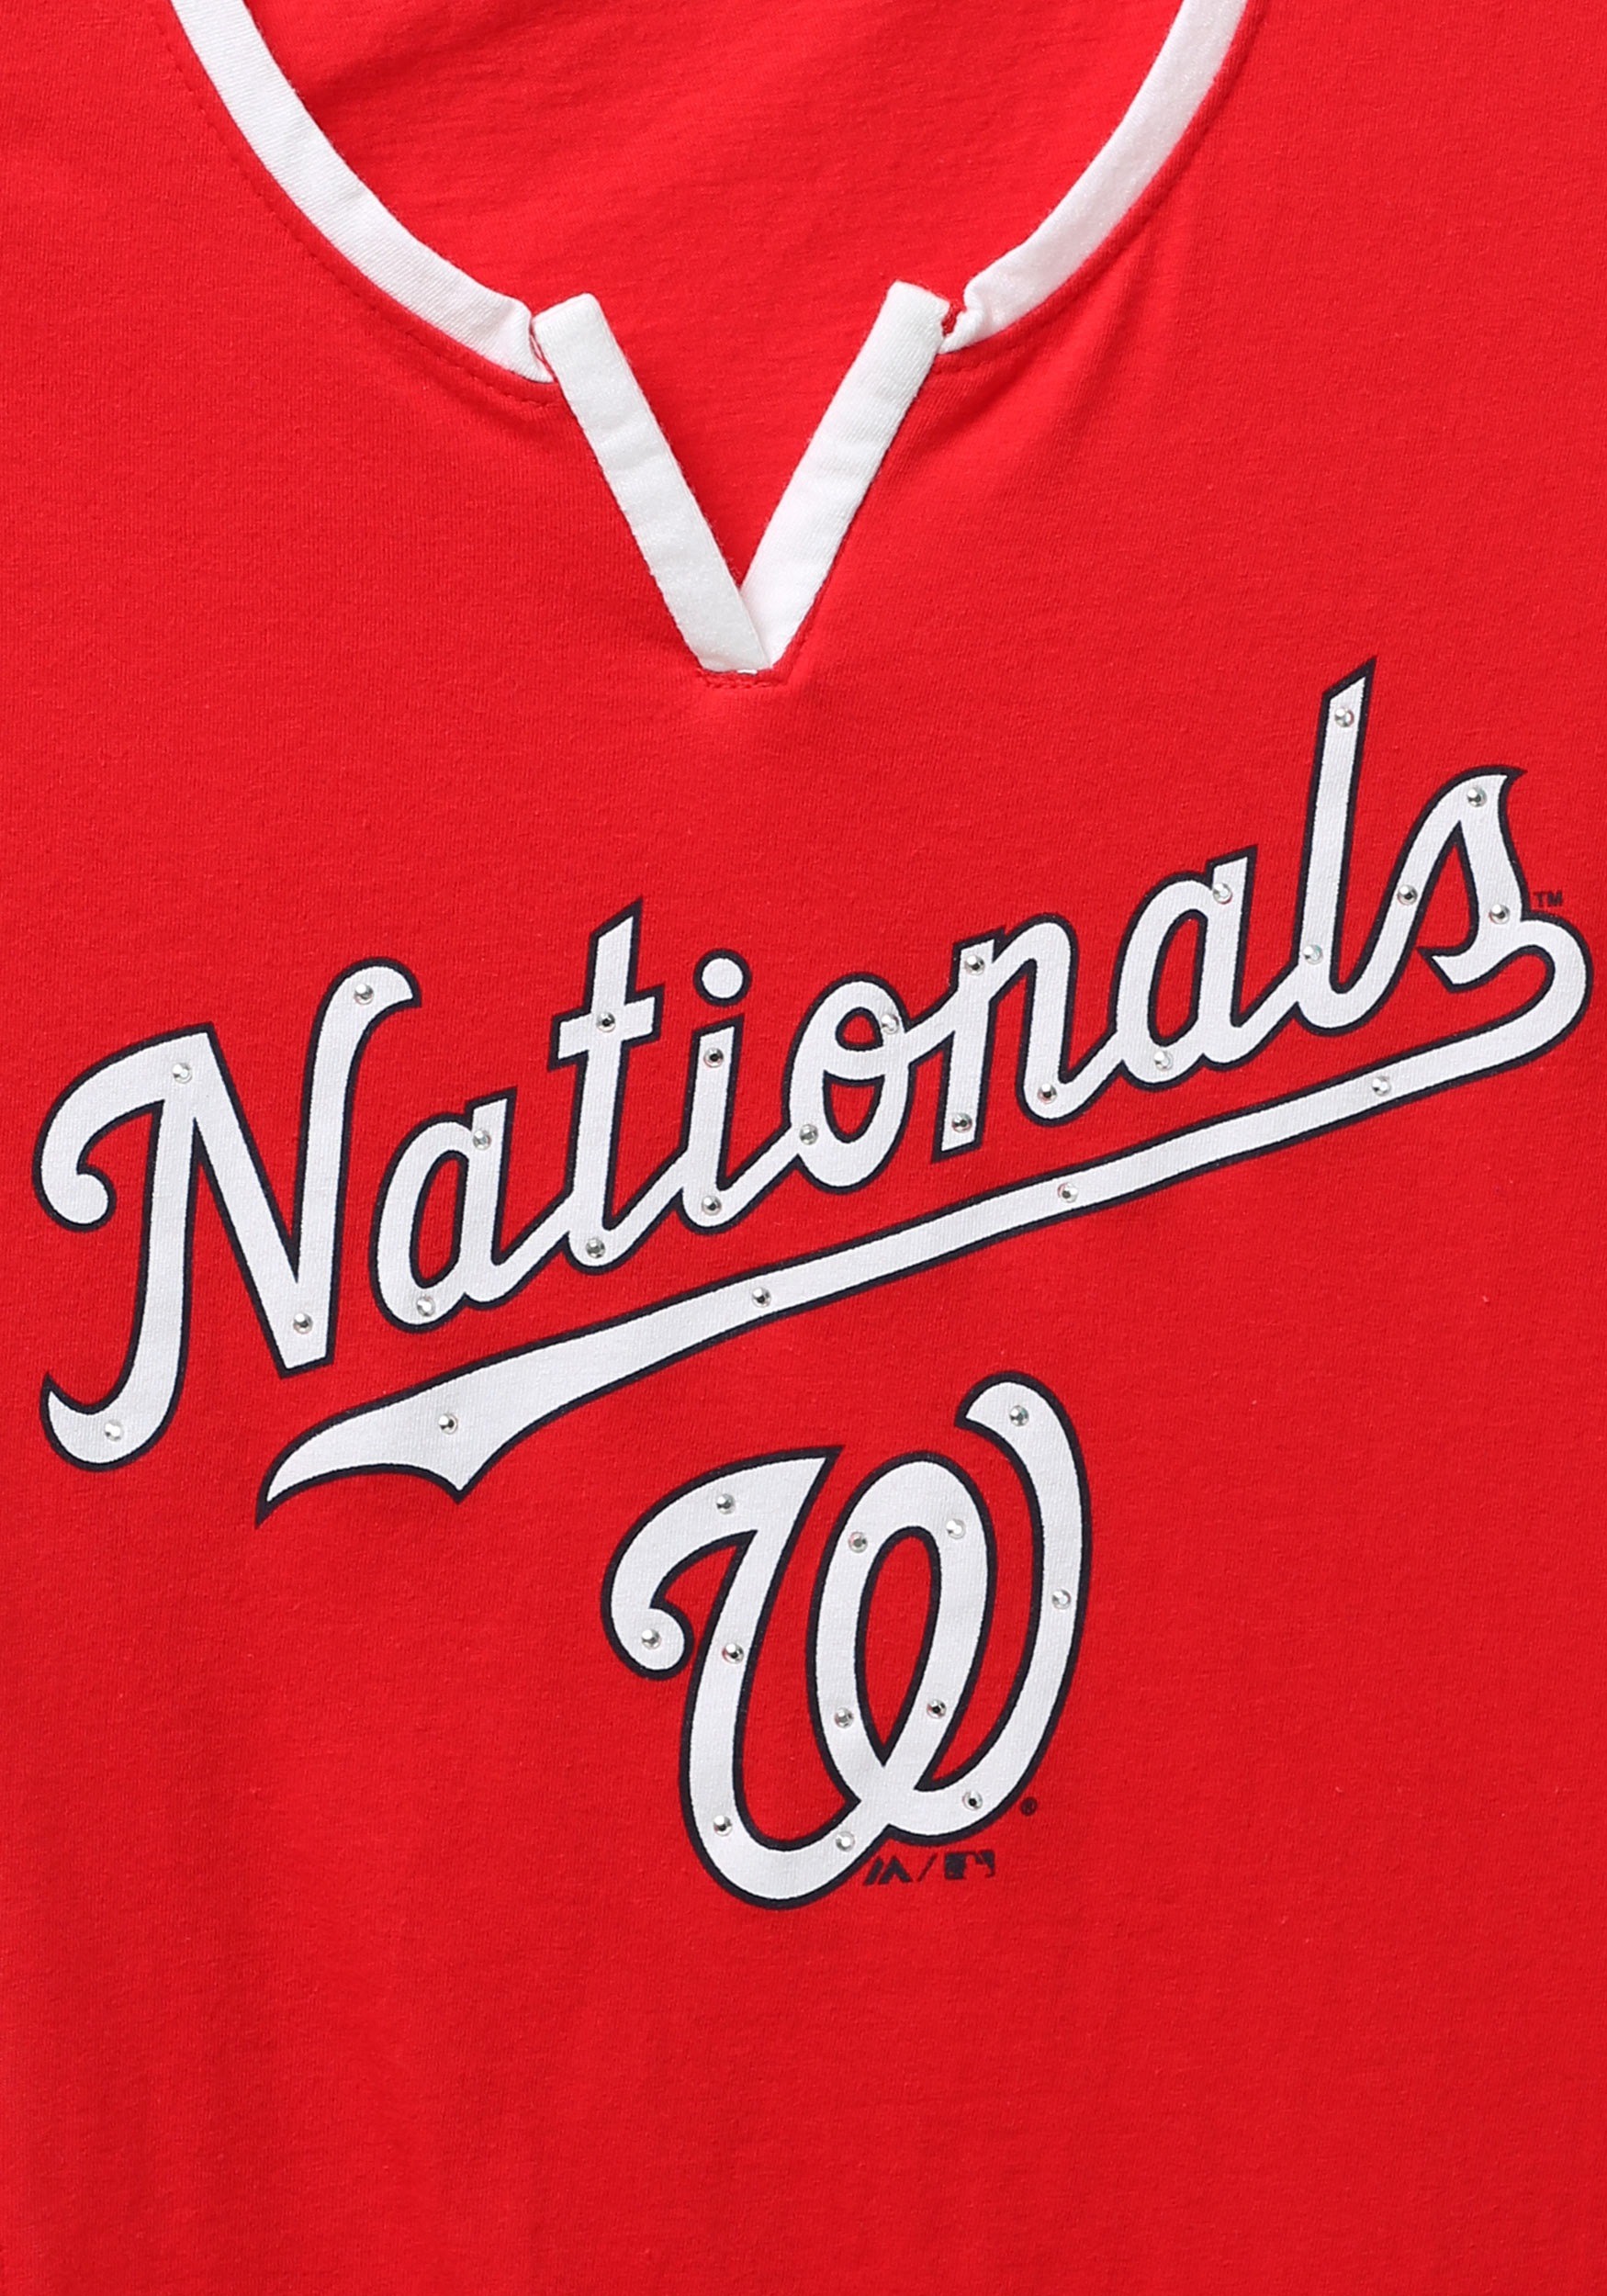 washington national t shirts